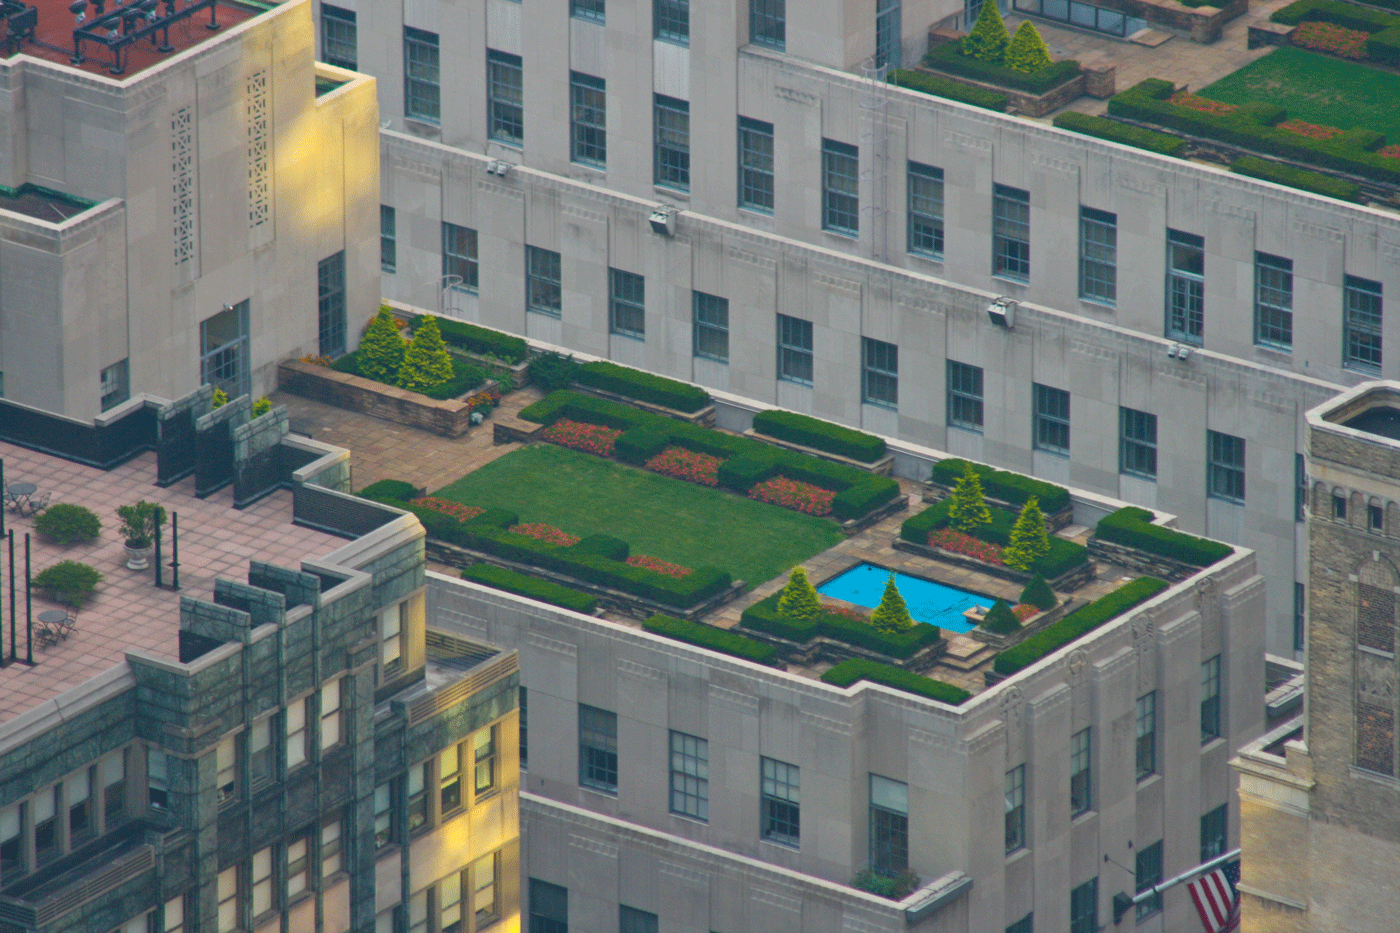 Rockefeller Center Roof Gardens Featured Image